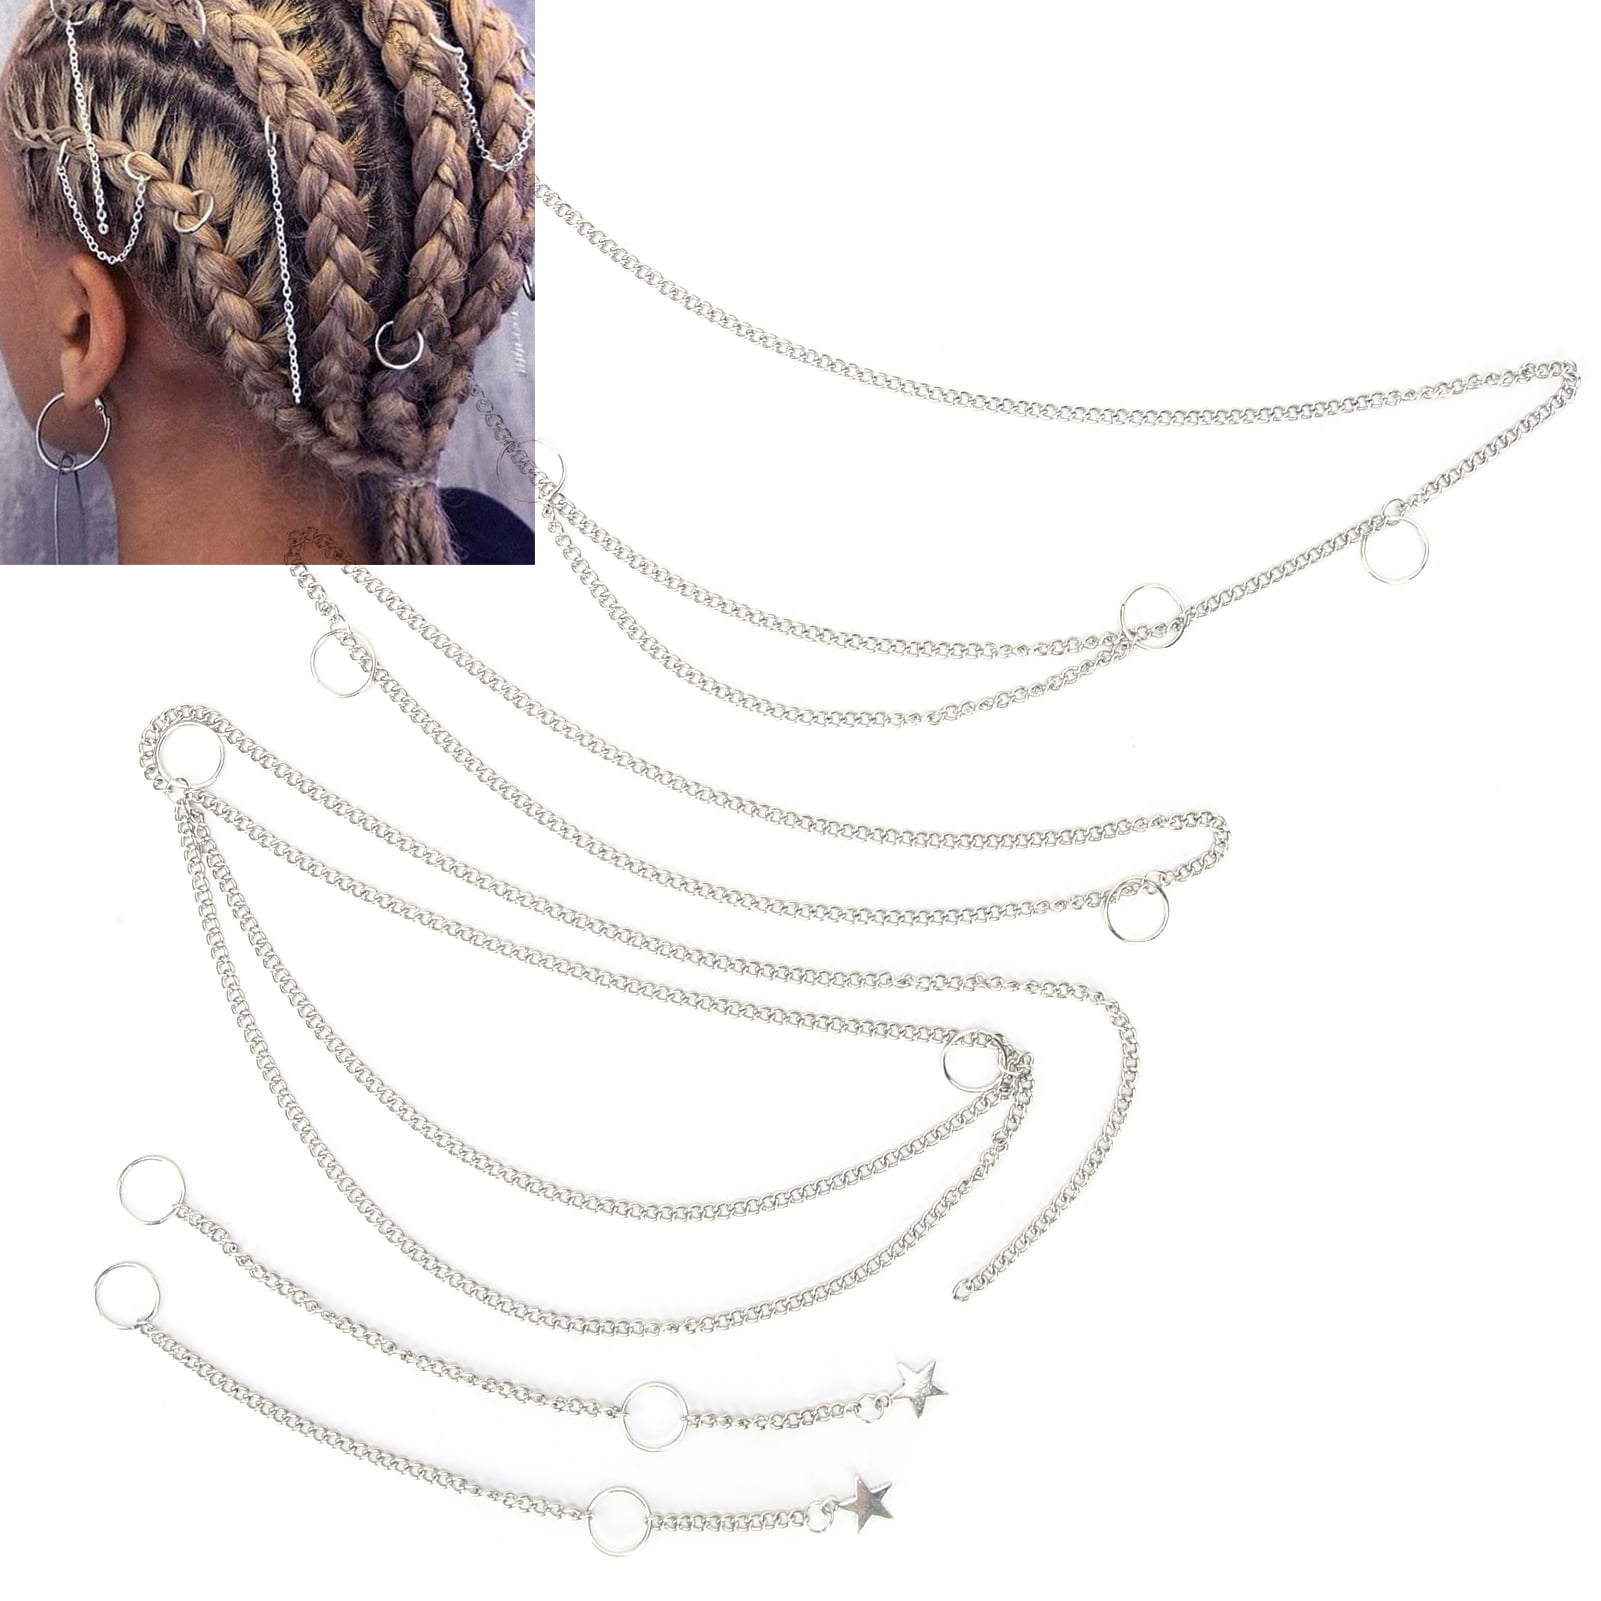 OTVIAP Hip Hop Punk Style Hair Braid Chain Dreadlocks Hair Chains DIY Hair  Decoration Accessories,Dreadlocks Hair Chains,Hair Braid Chain 